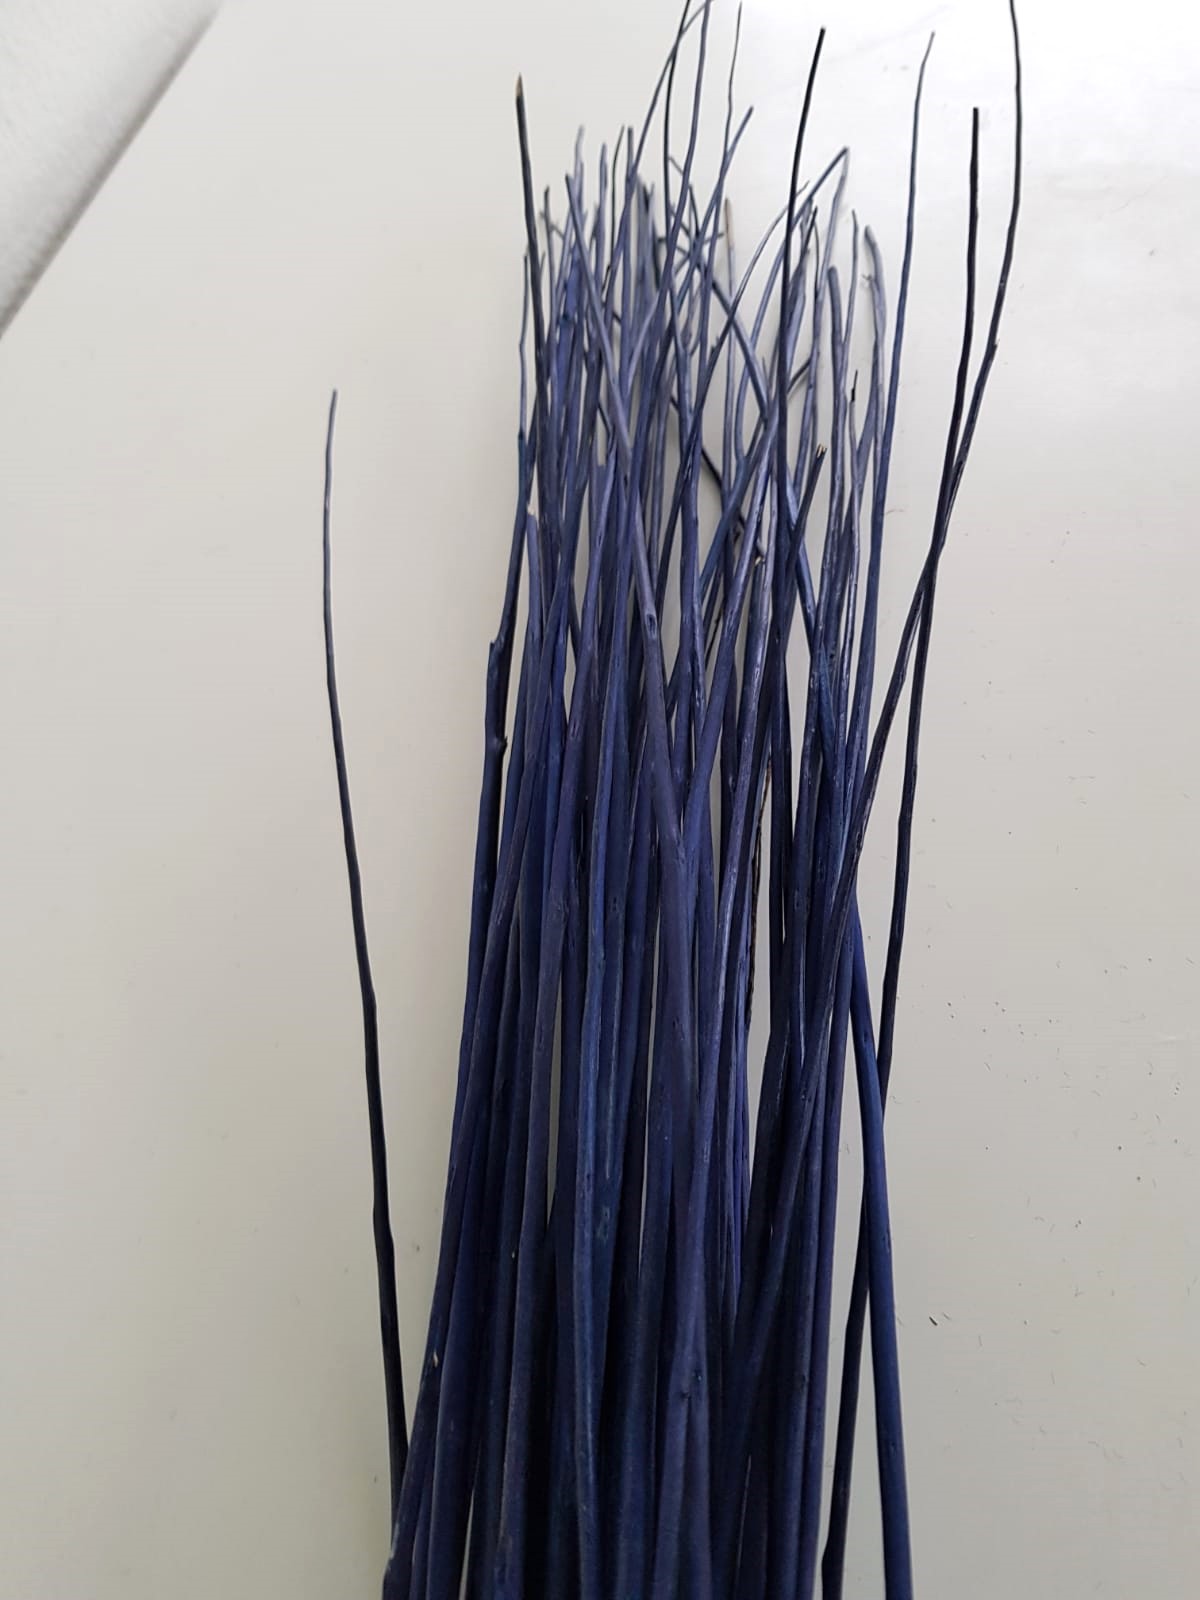 Fascio rami rattan blu 50 steli - 100 cm, Shop online fiori secchi